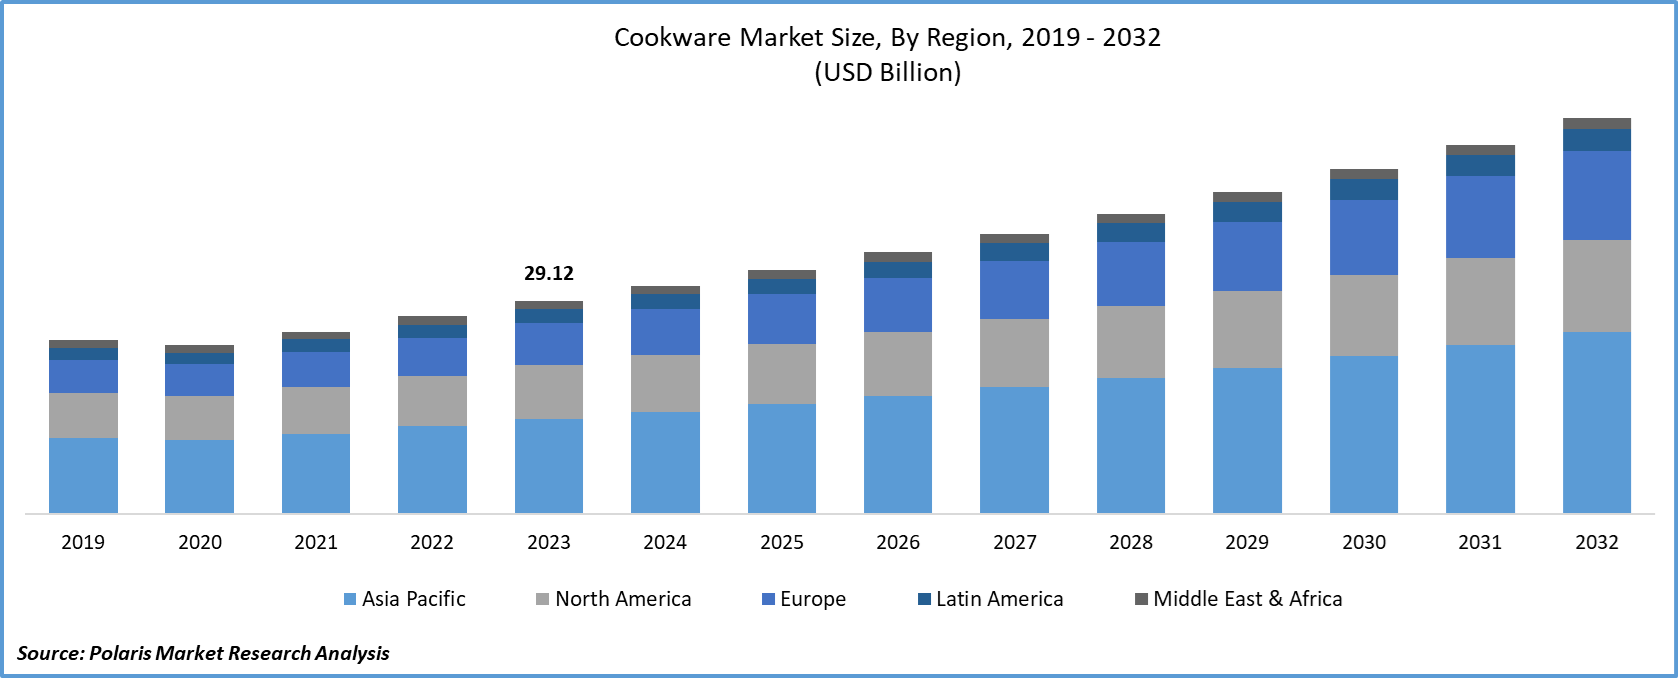 Cookware Market Size